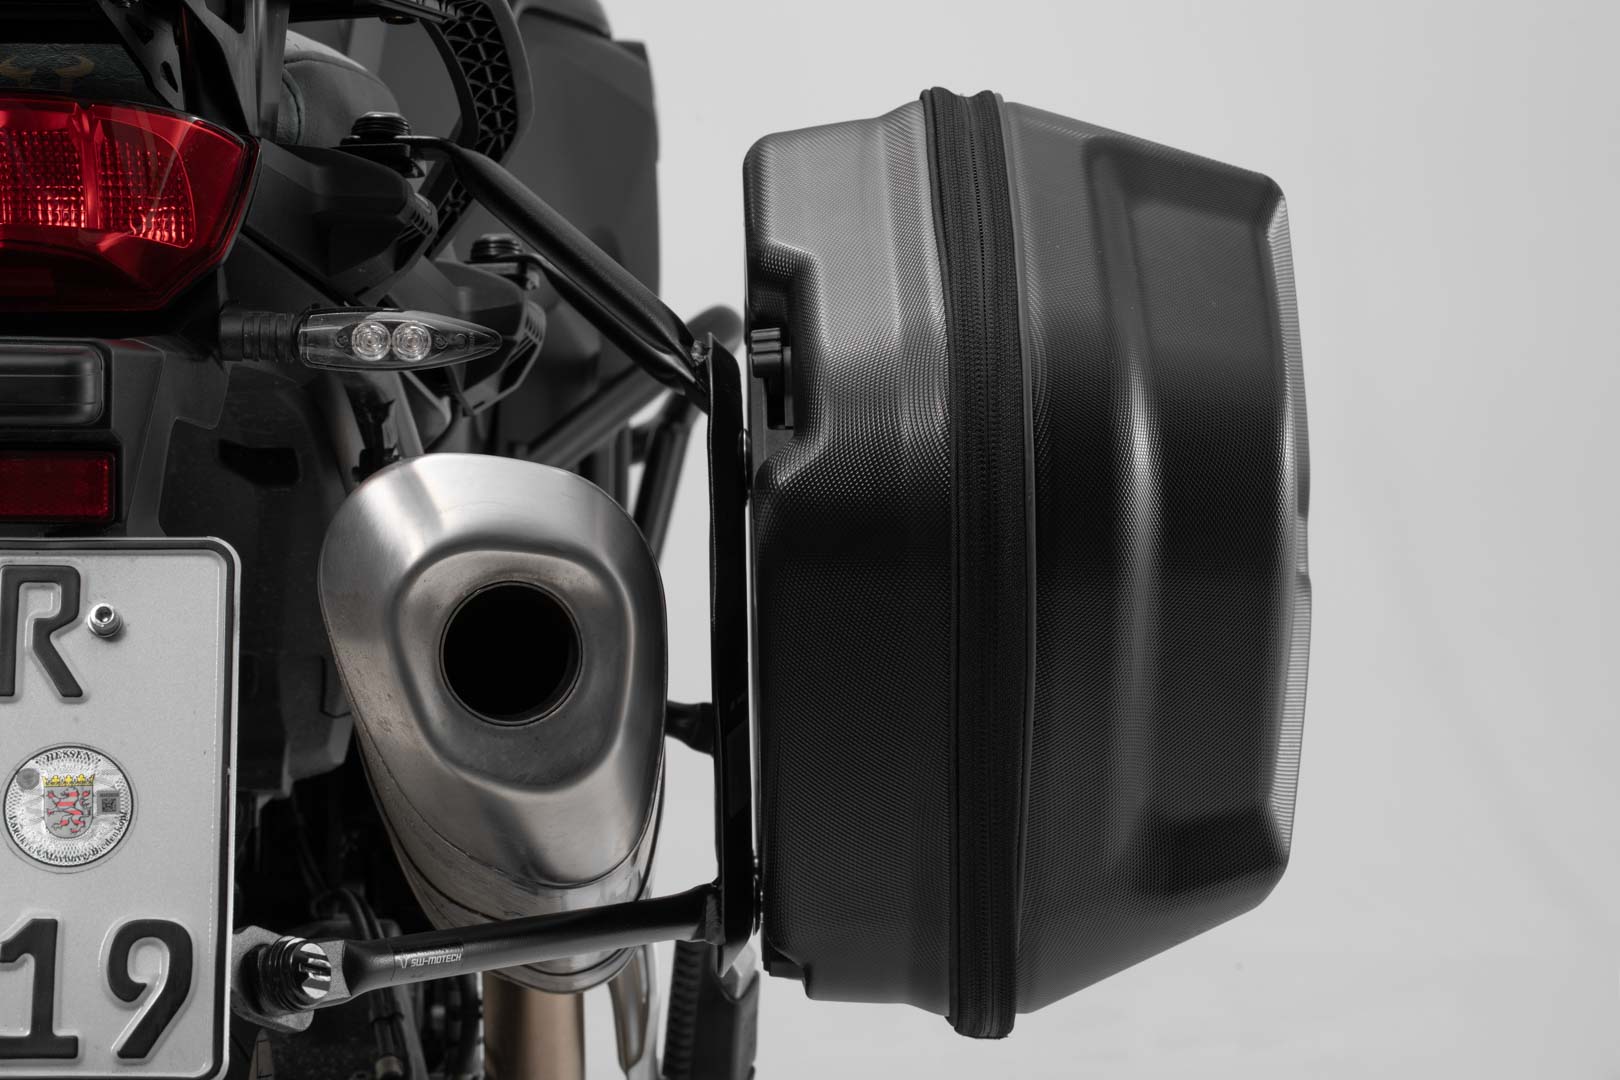 AERO ABS Side Case System 2x25 litre Moto Guzzi V85 TT (19-)